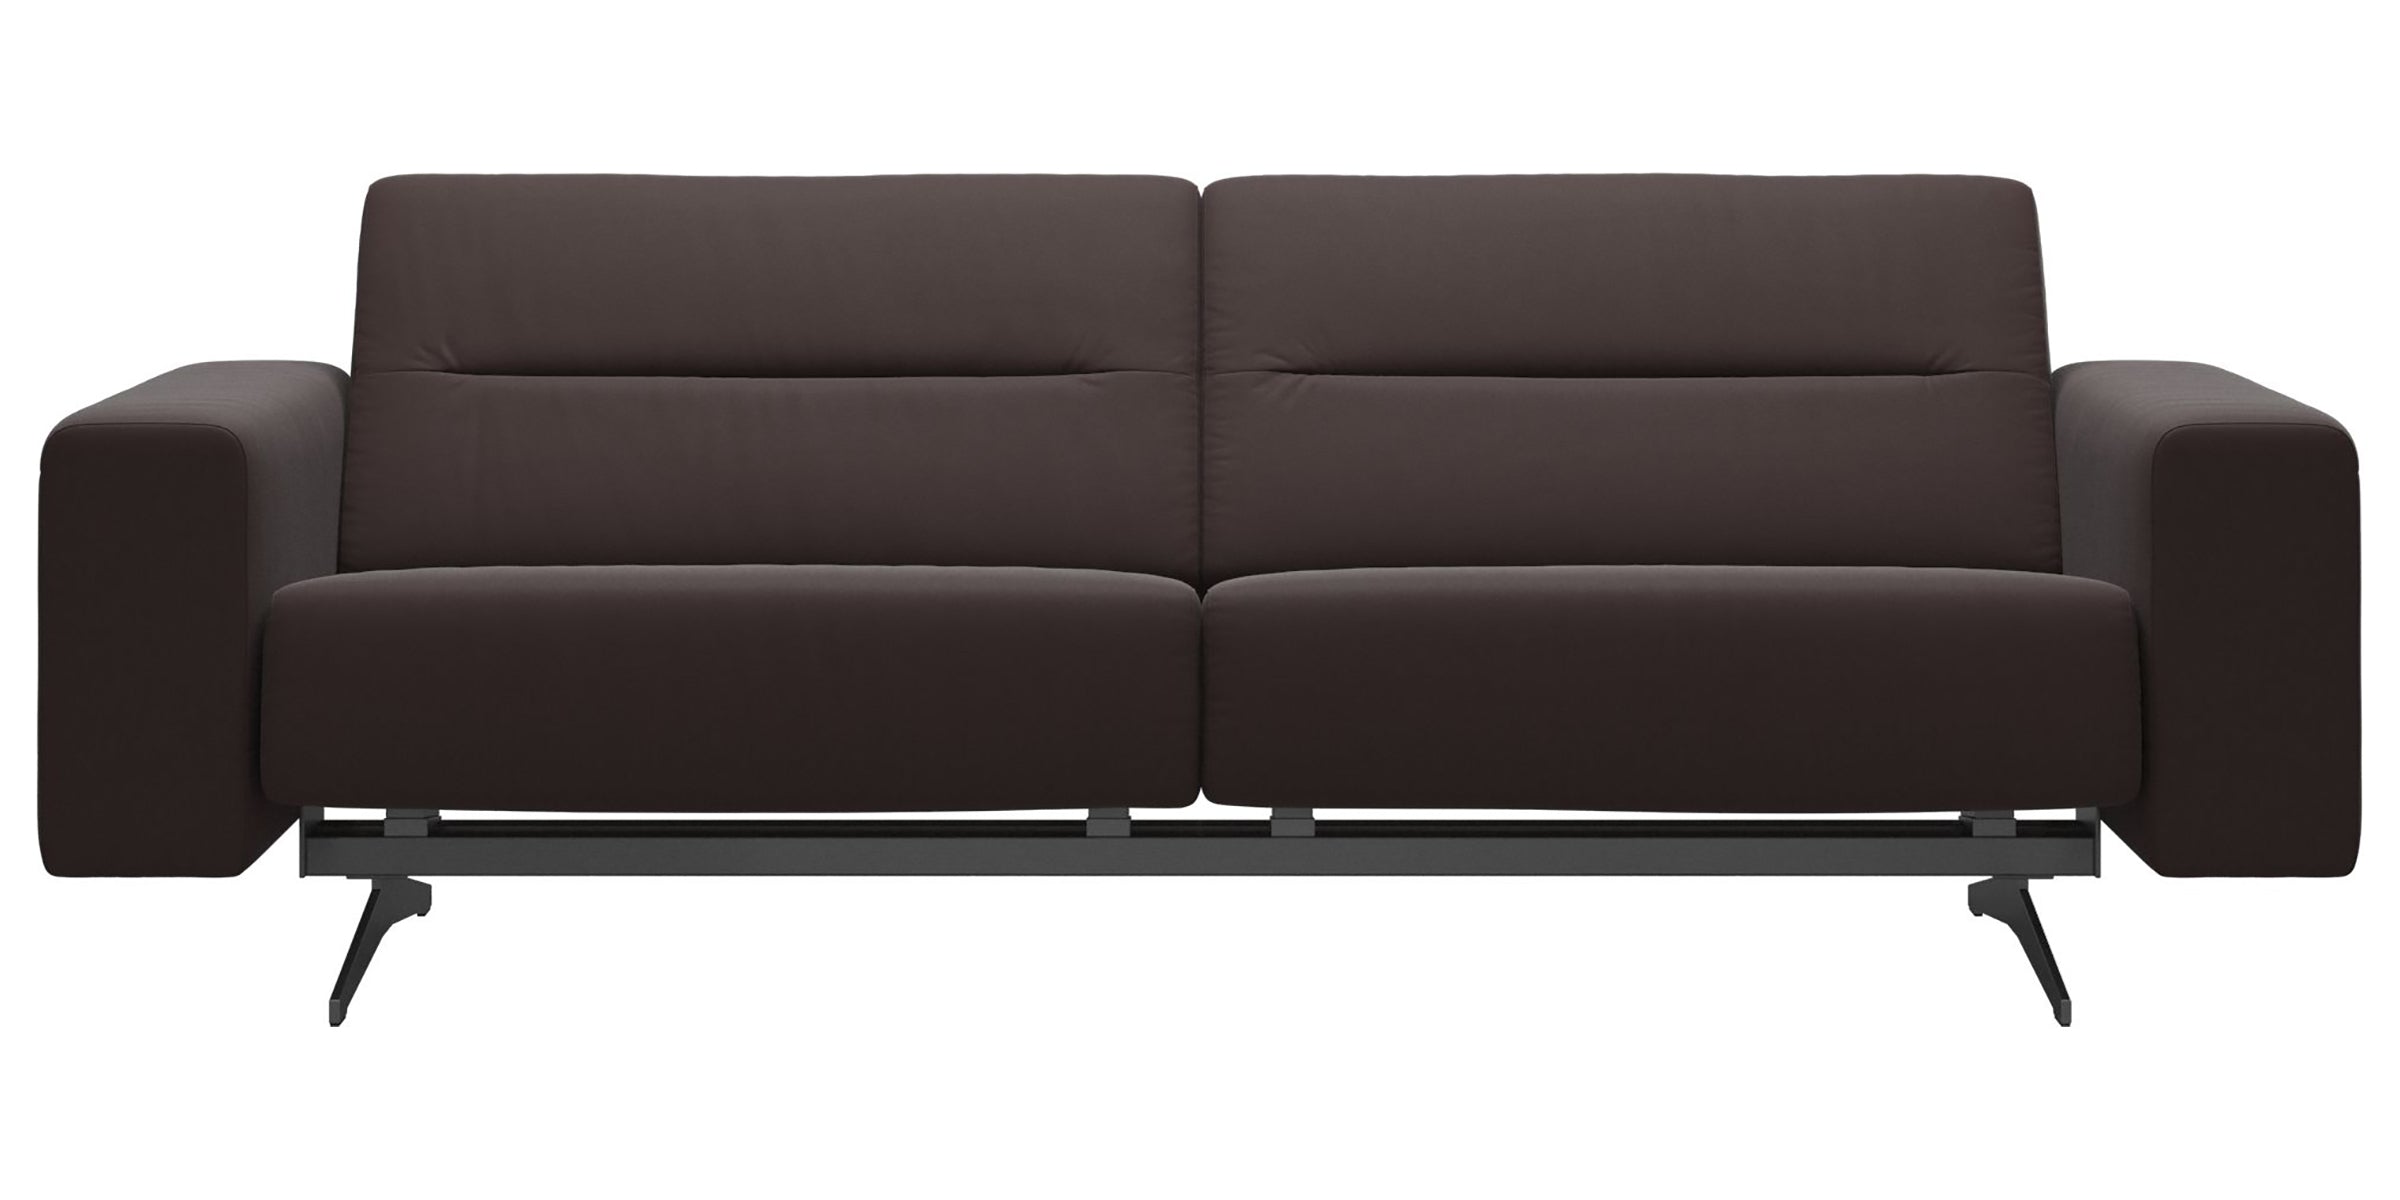 Paloma Leather Chocolate & Chrome Base | Stressless Stella 2.5-Seater Sofa with S1 Arm | Valley Ridge Furniture